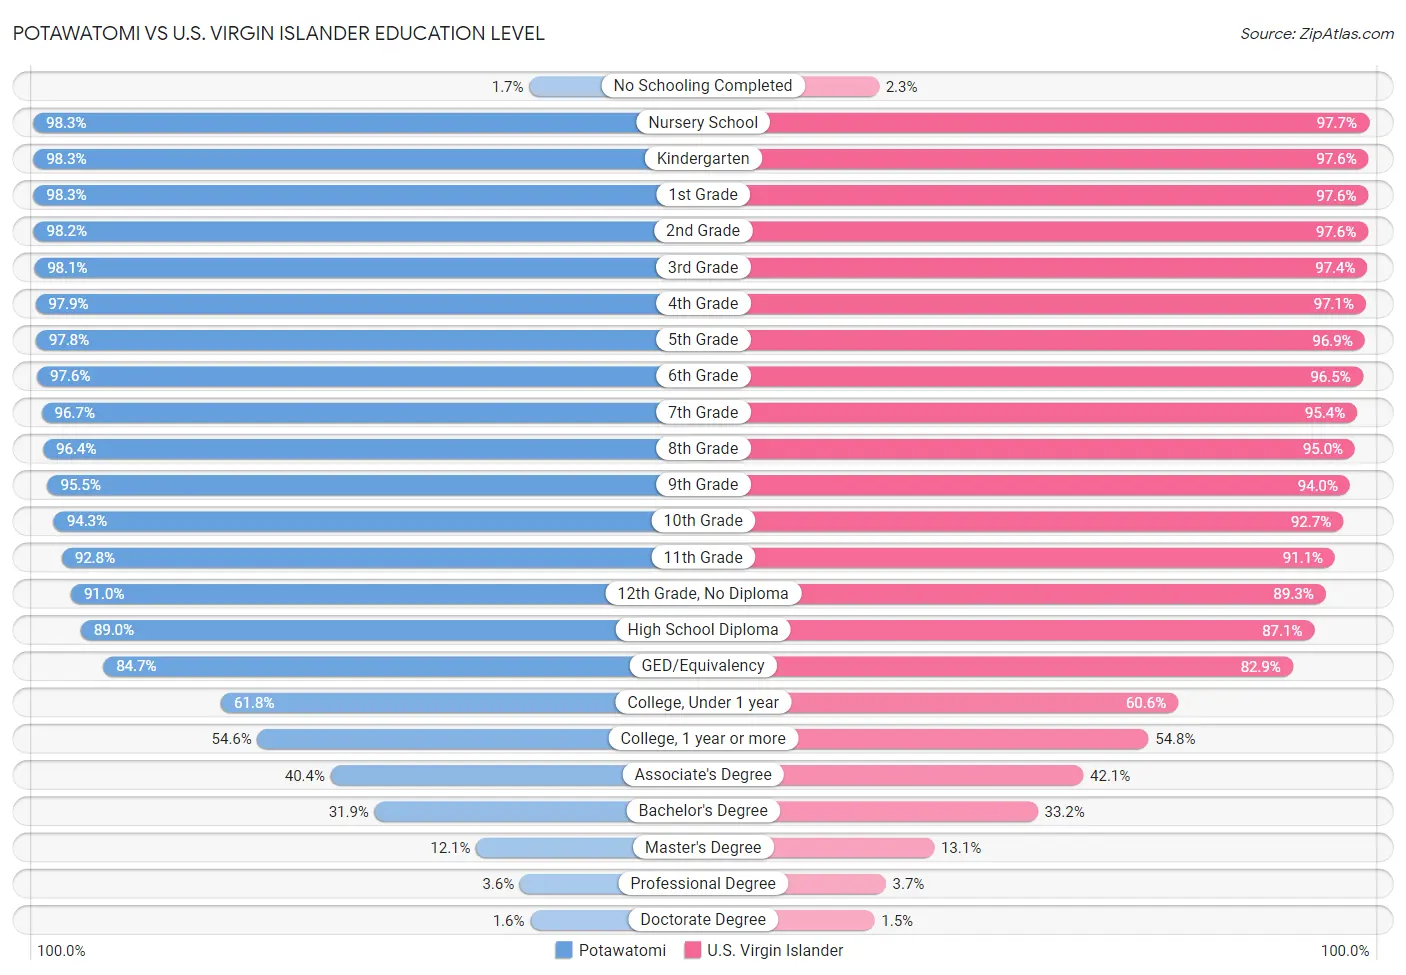 Potawatomi vs U.S. Virgin Islander Education Level